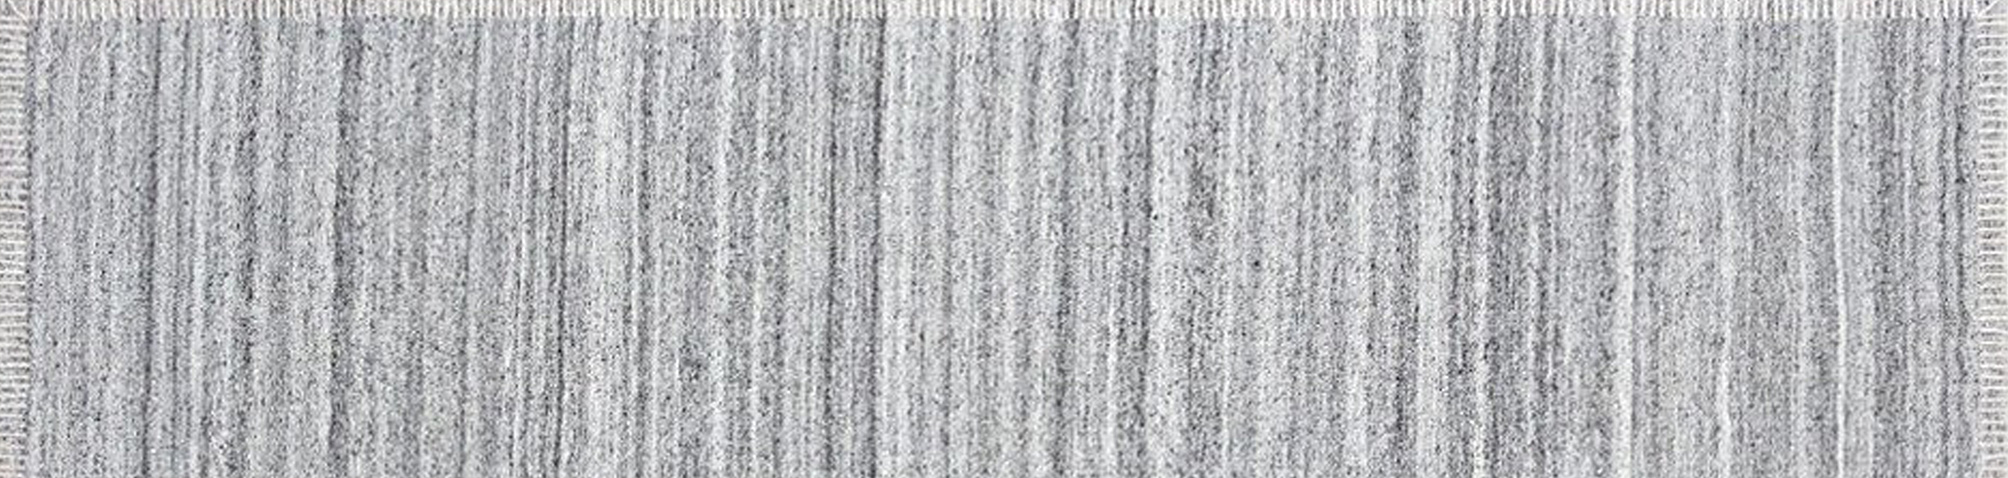 RUG 2 The nevada rug Luumo grey nursery room, sydney interior design styling.jpg